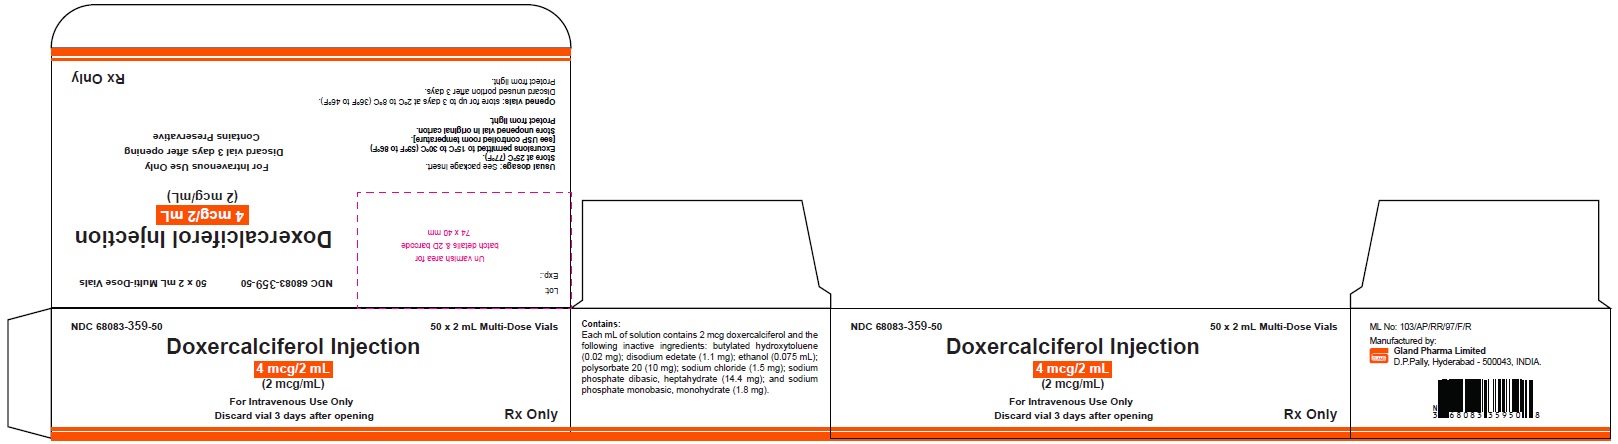 Doxercalciferol-SPL-Carton-MDV